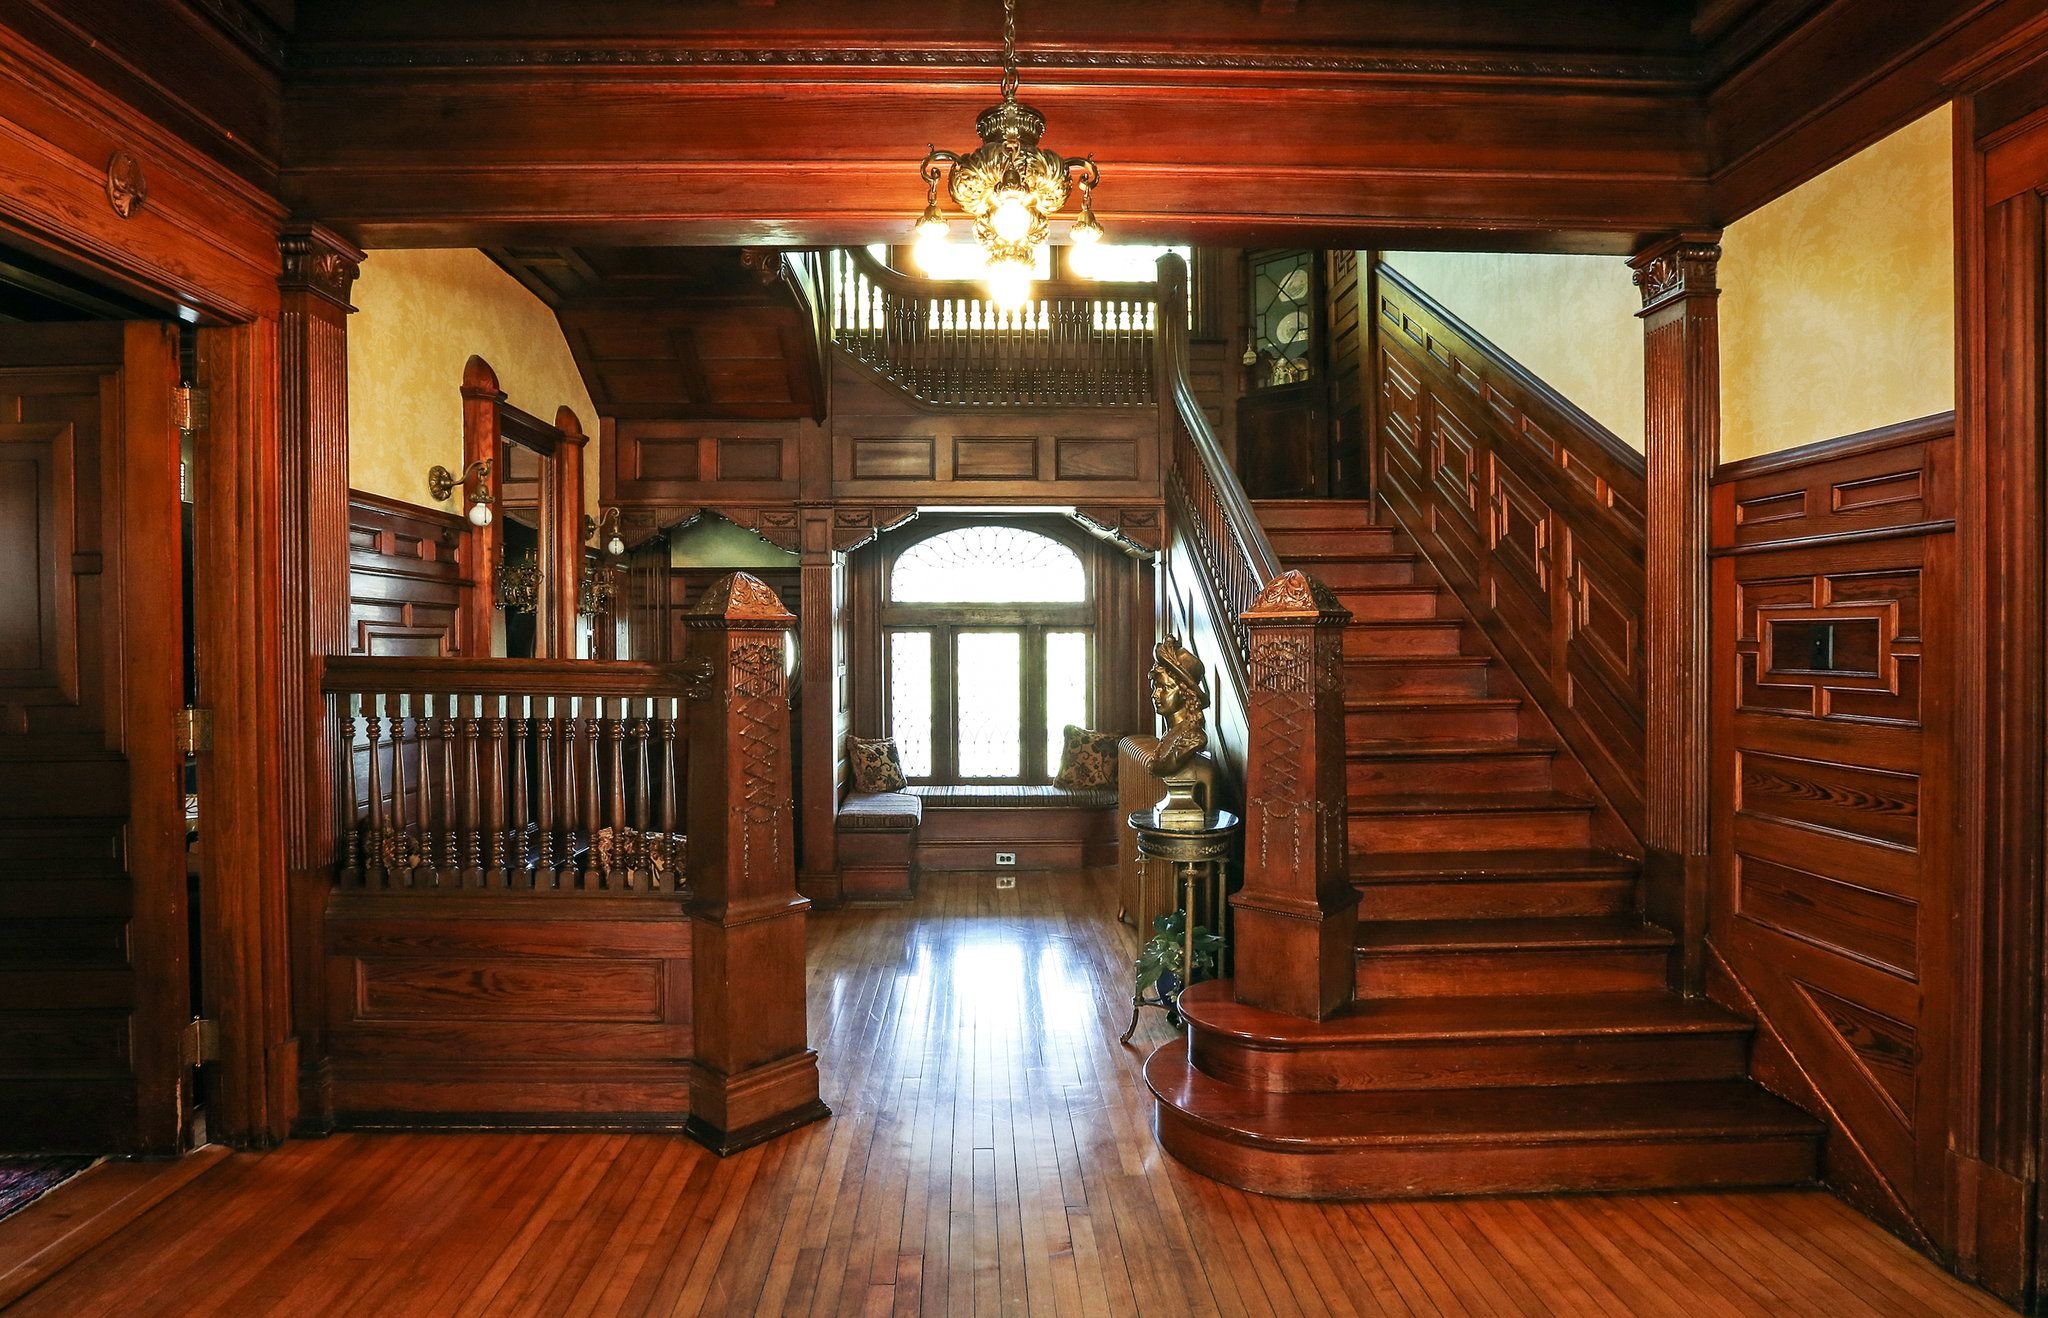 The 1900 house. Vintage story дом. Готика в интерьере лестница. Vintage story красивый дом. Винтаж стори красивый дом.